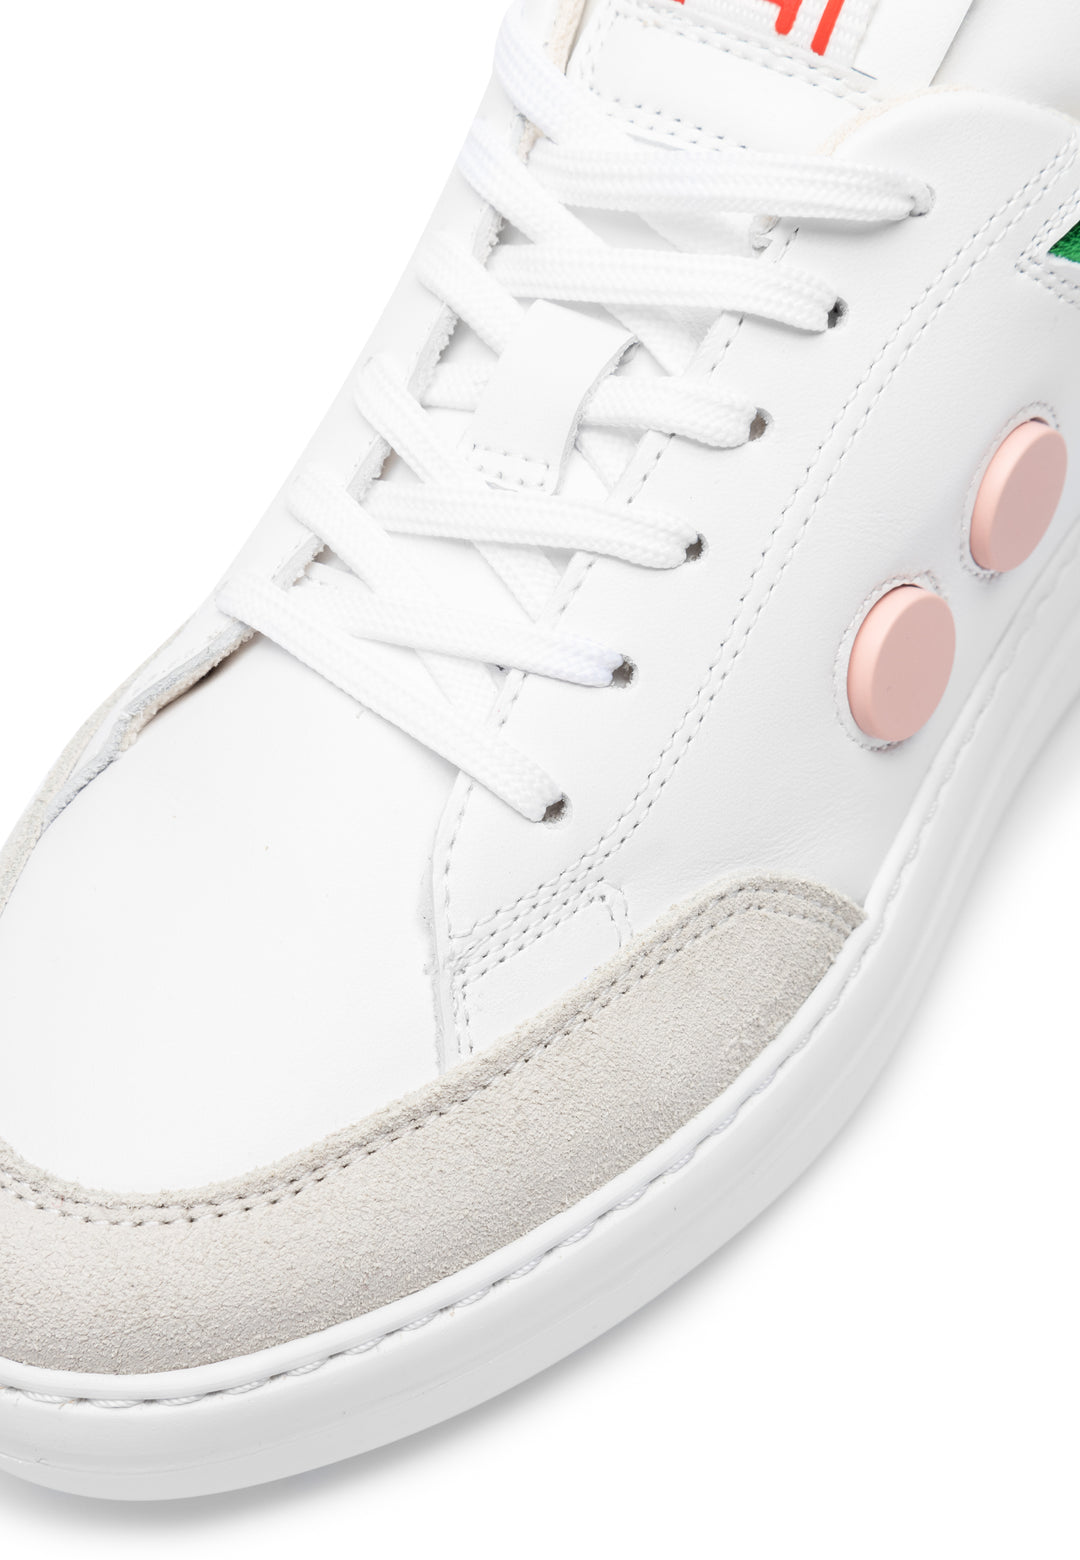 LÄST Minimalist Low - Leather - White/Green Metallic Low Sneakers White/Green